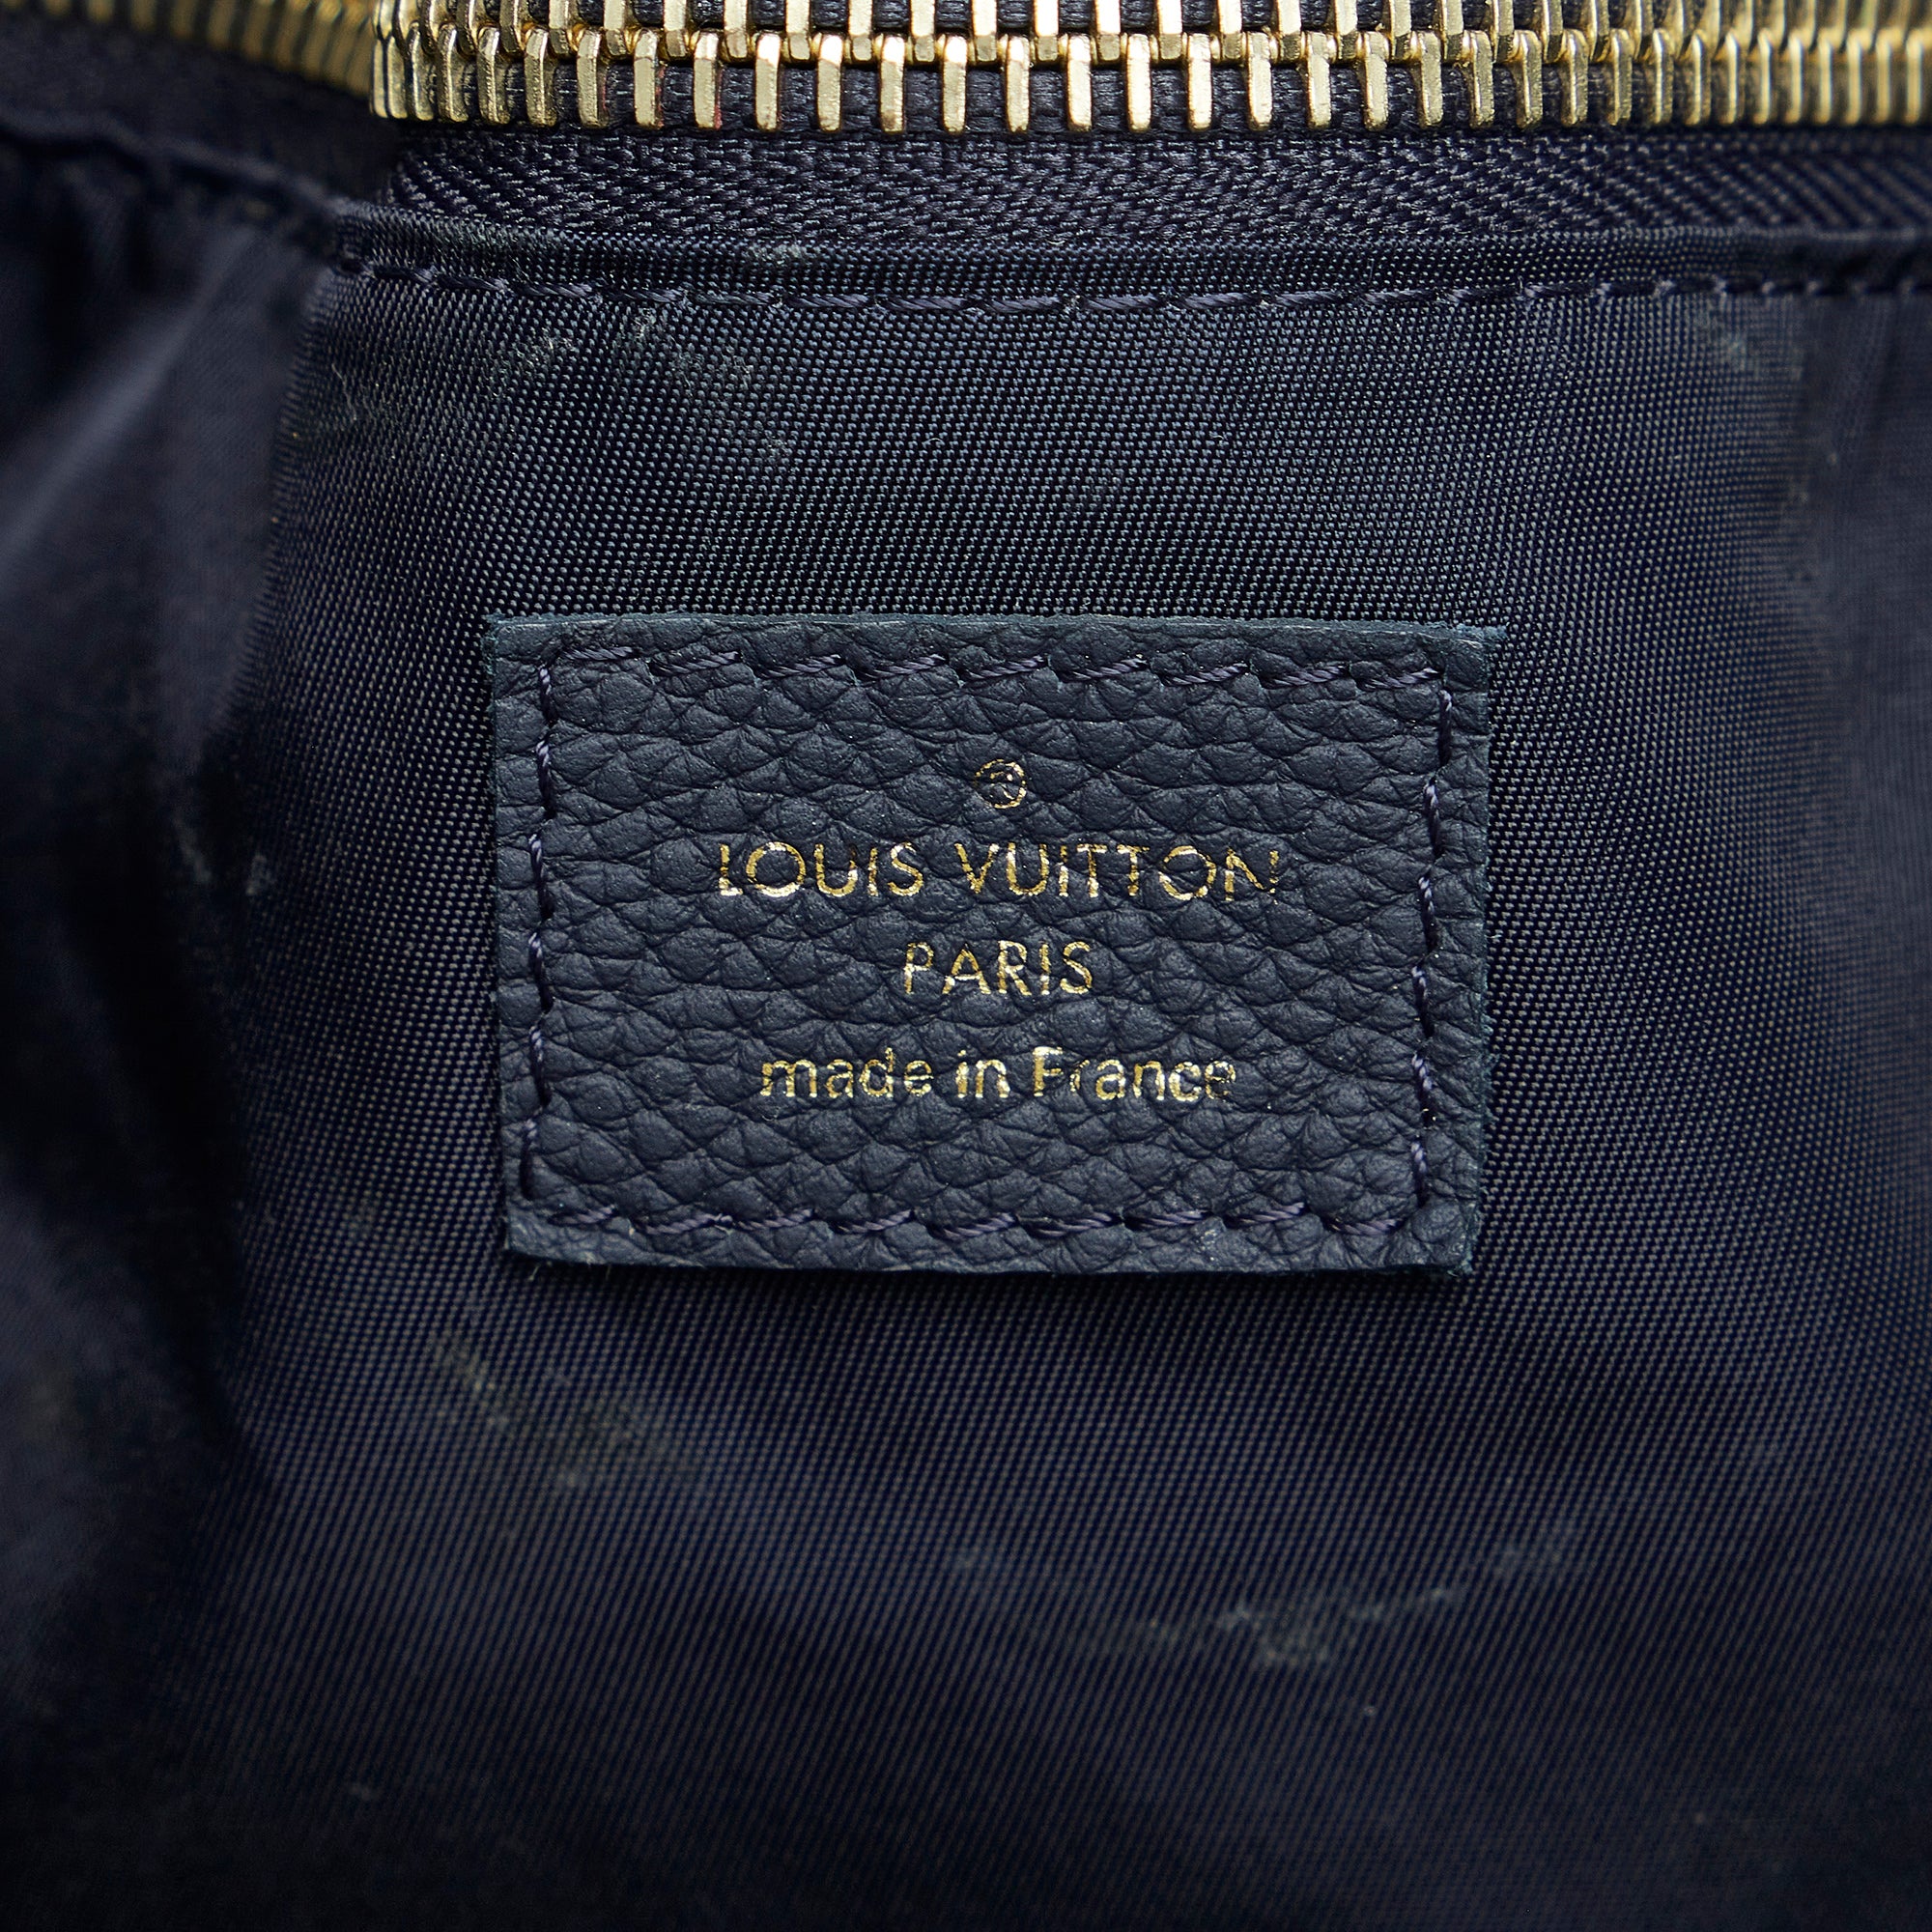 LOUIS VUITTON Noefull MM Hand Tote Bag Monogram Denim Leather